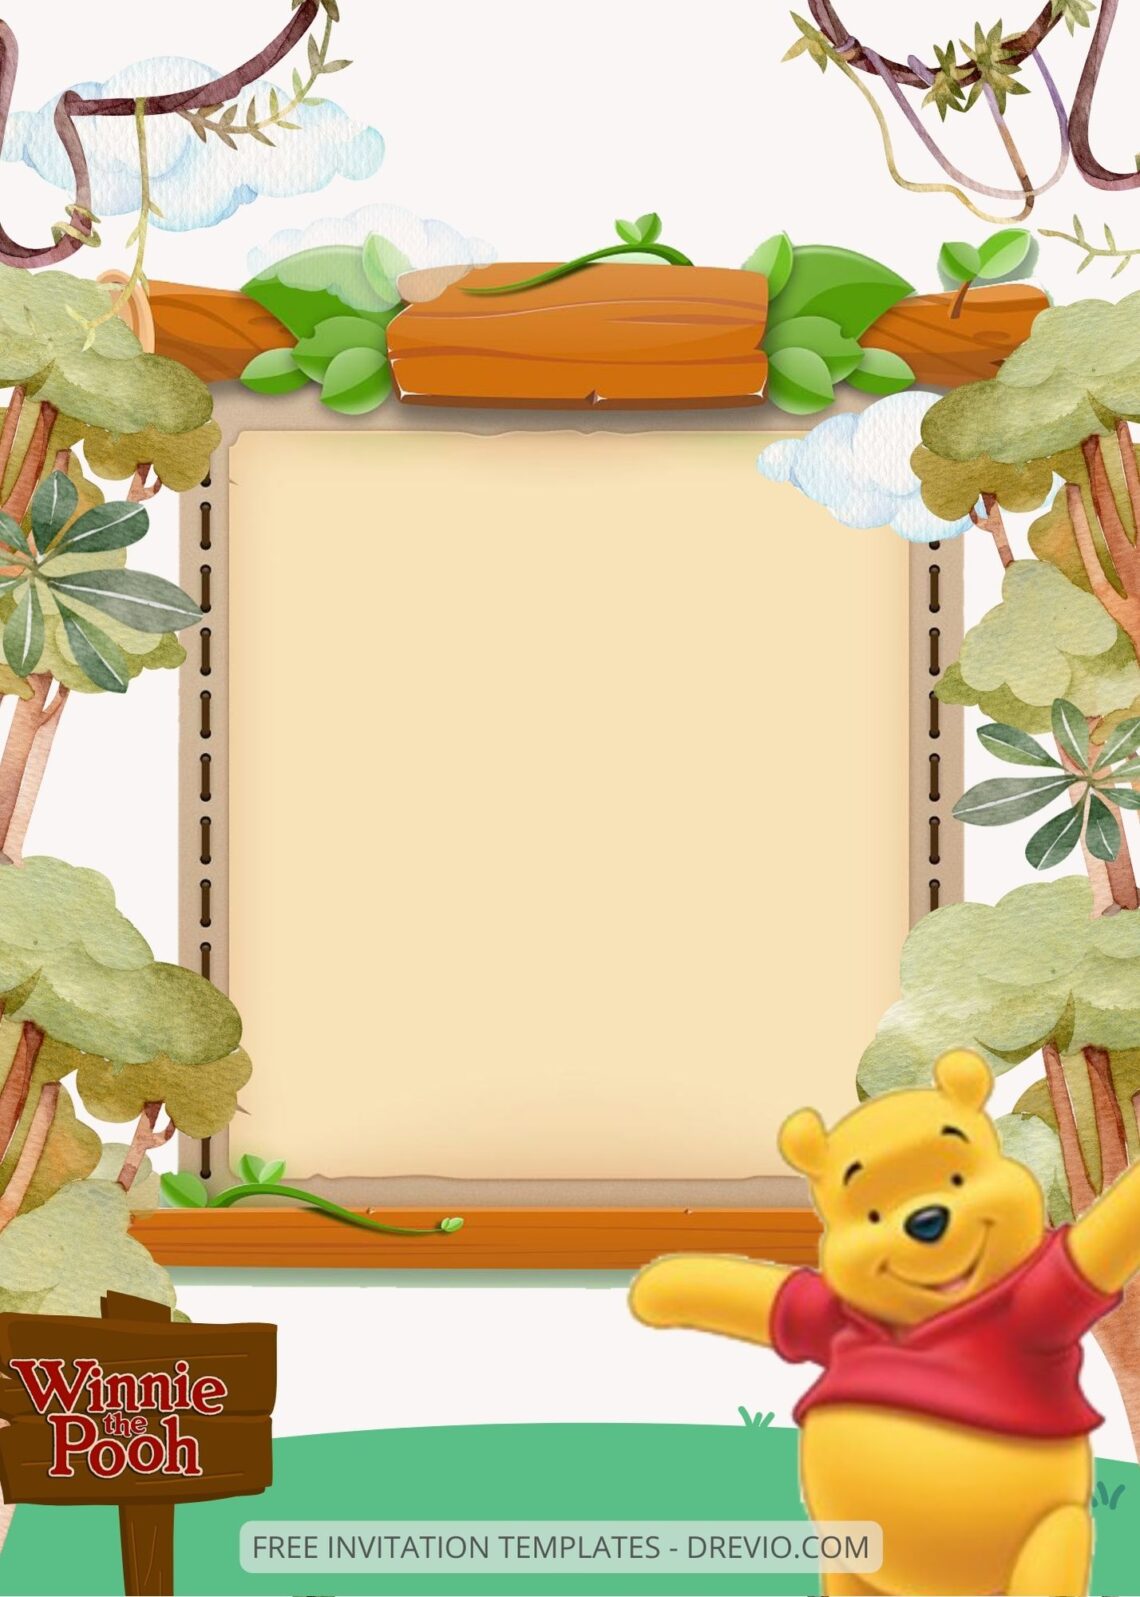 FREE EDITABLE - 9+ Winnie The Pooh Canva Birthday Invitation Templates Eight